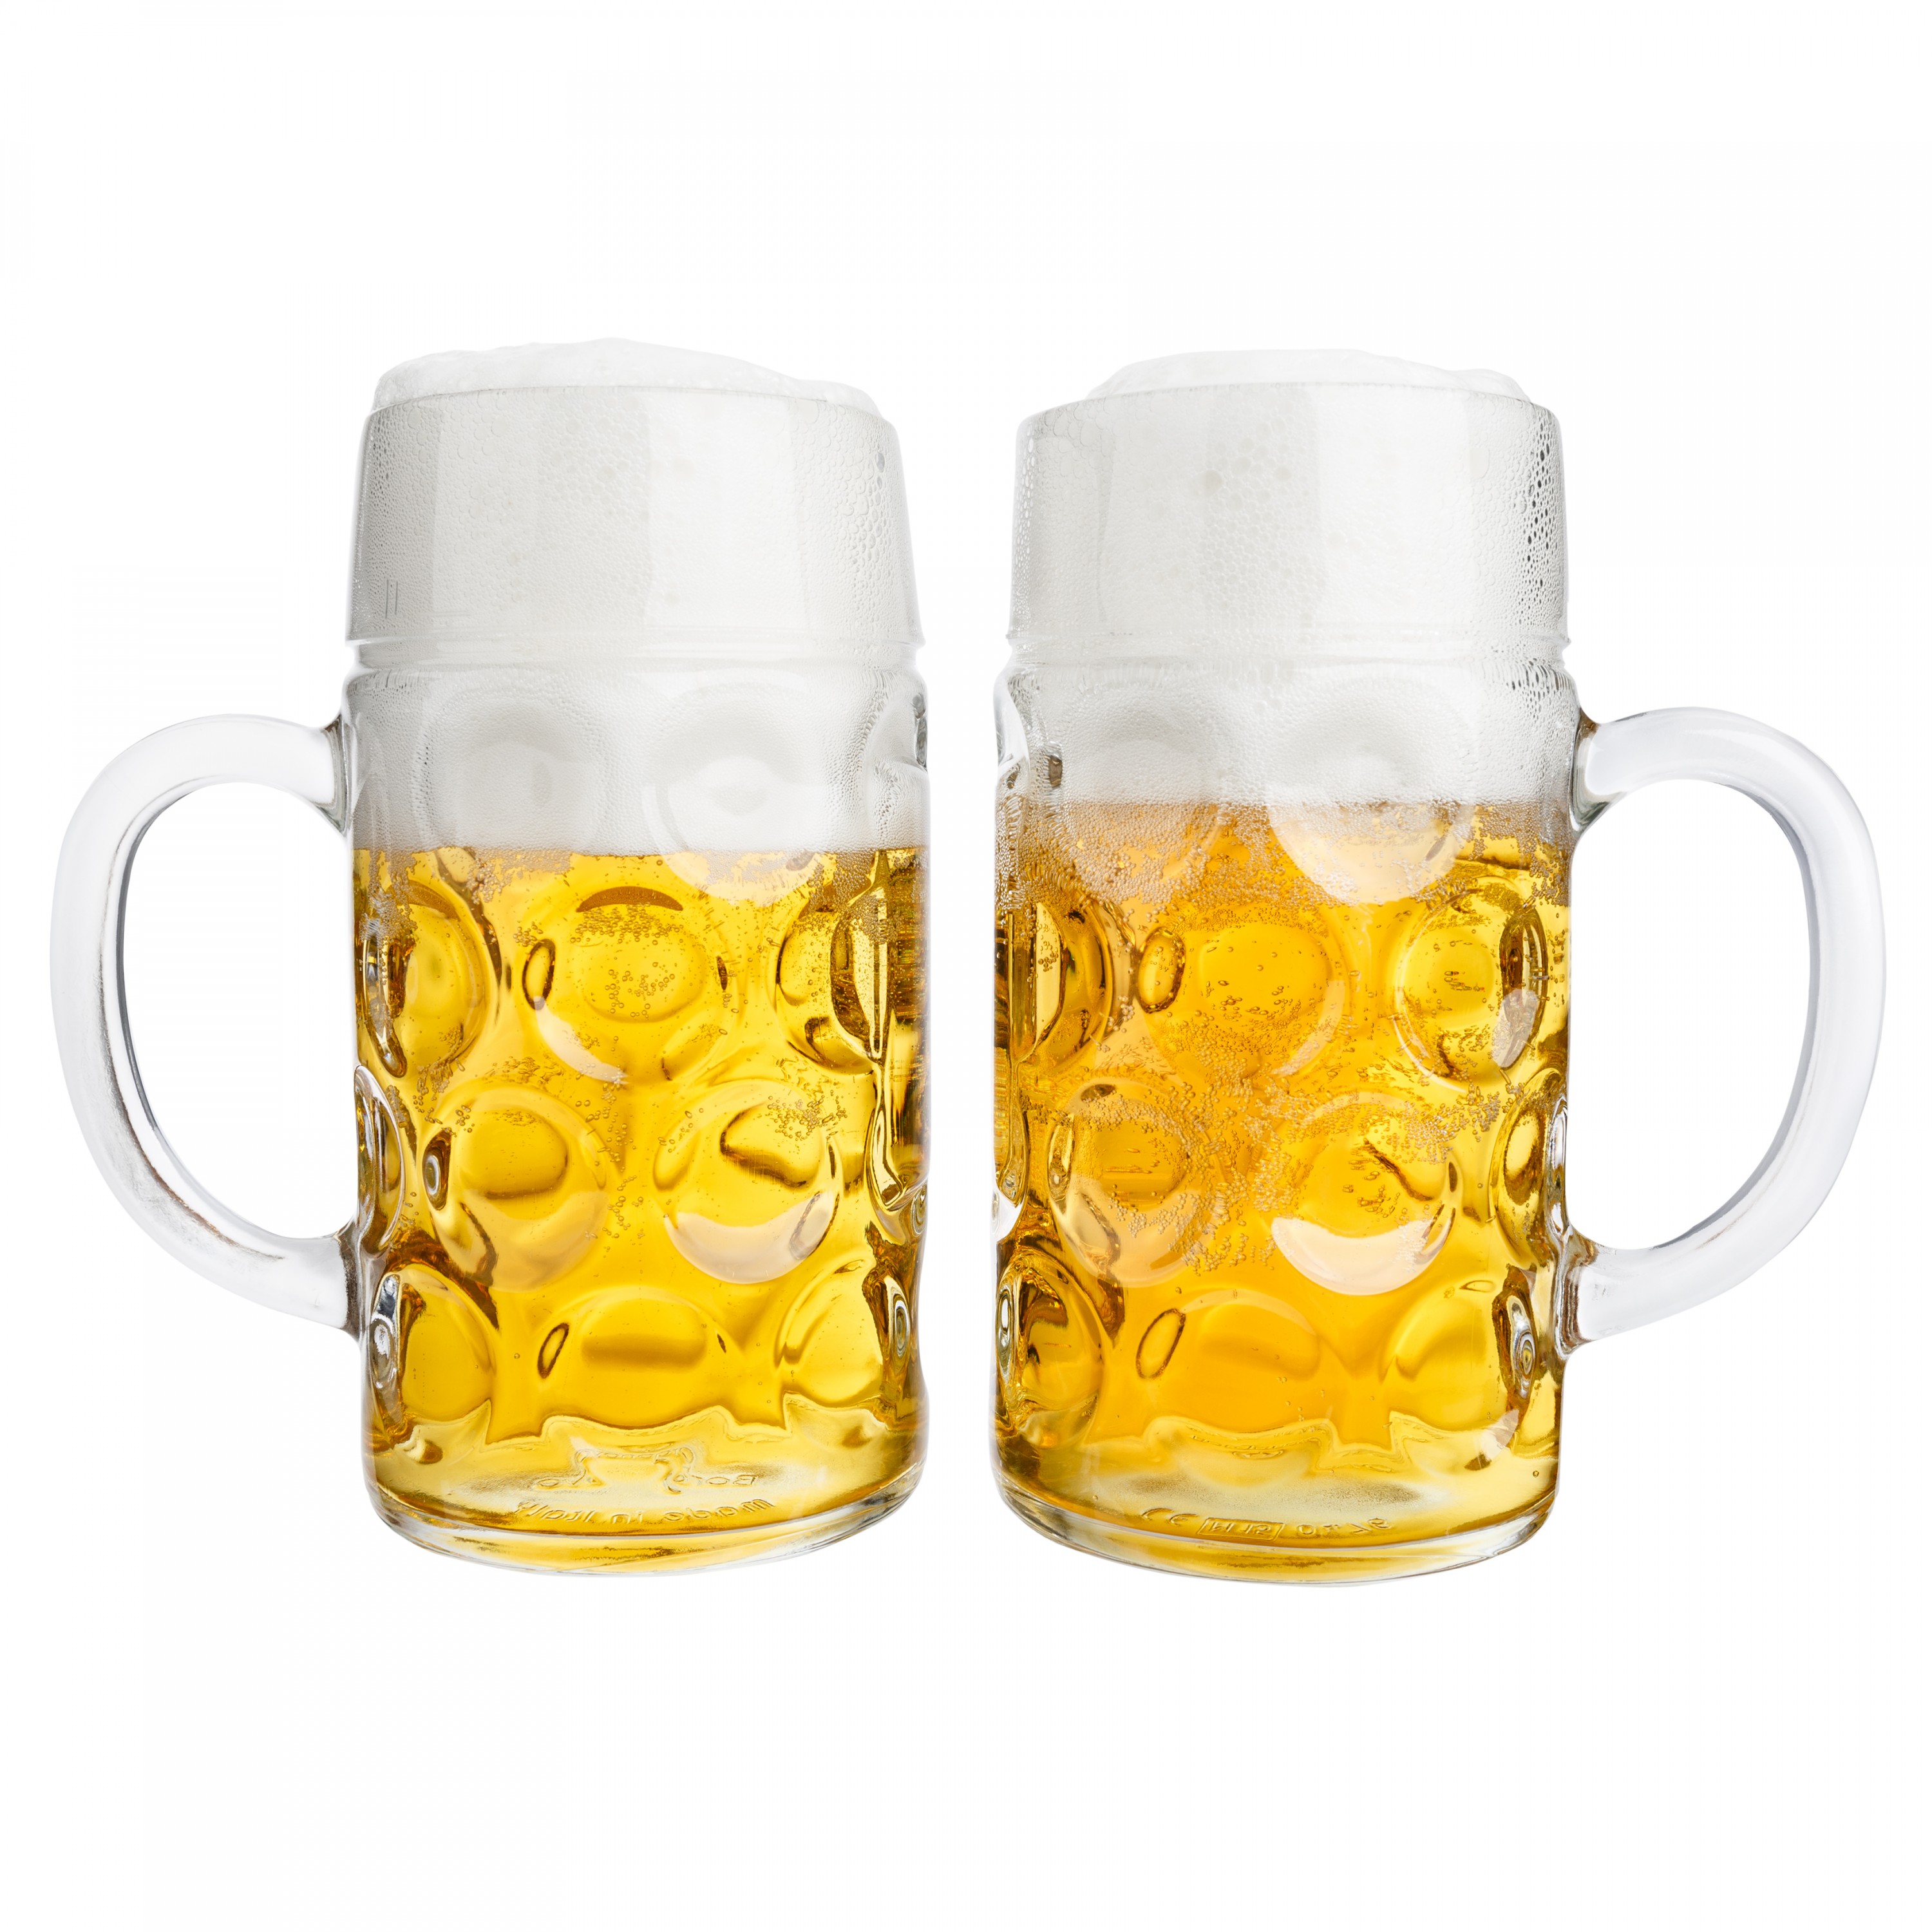 2er Set Maßkrug 1 L geeicht Bierkrug Glas Bierglas Glaskrug Maß Bier - 1 Maß Bier